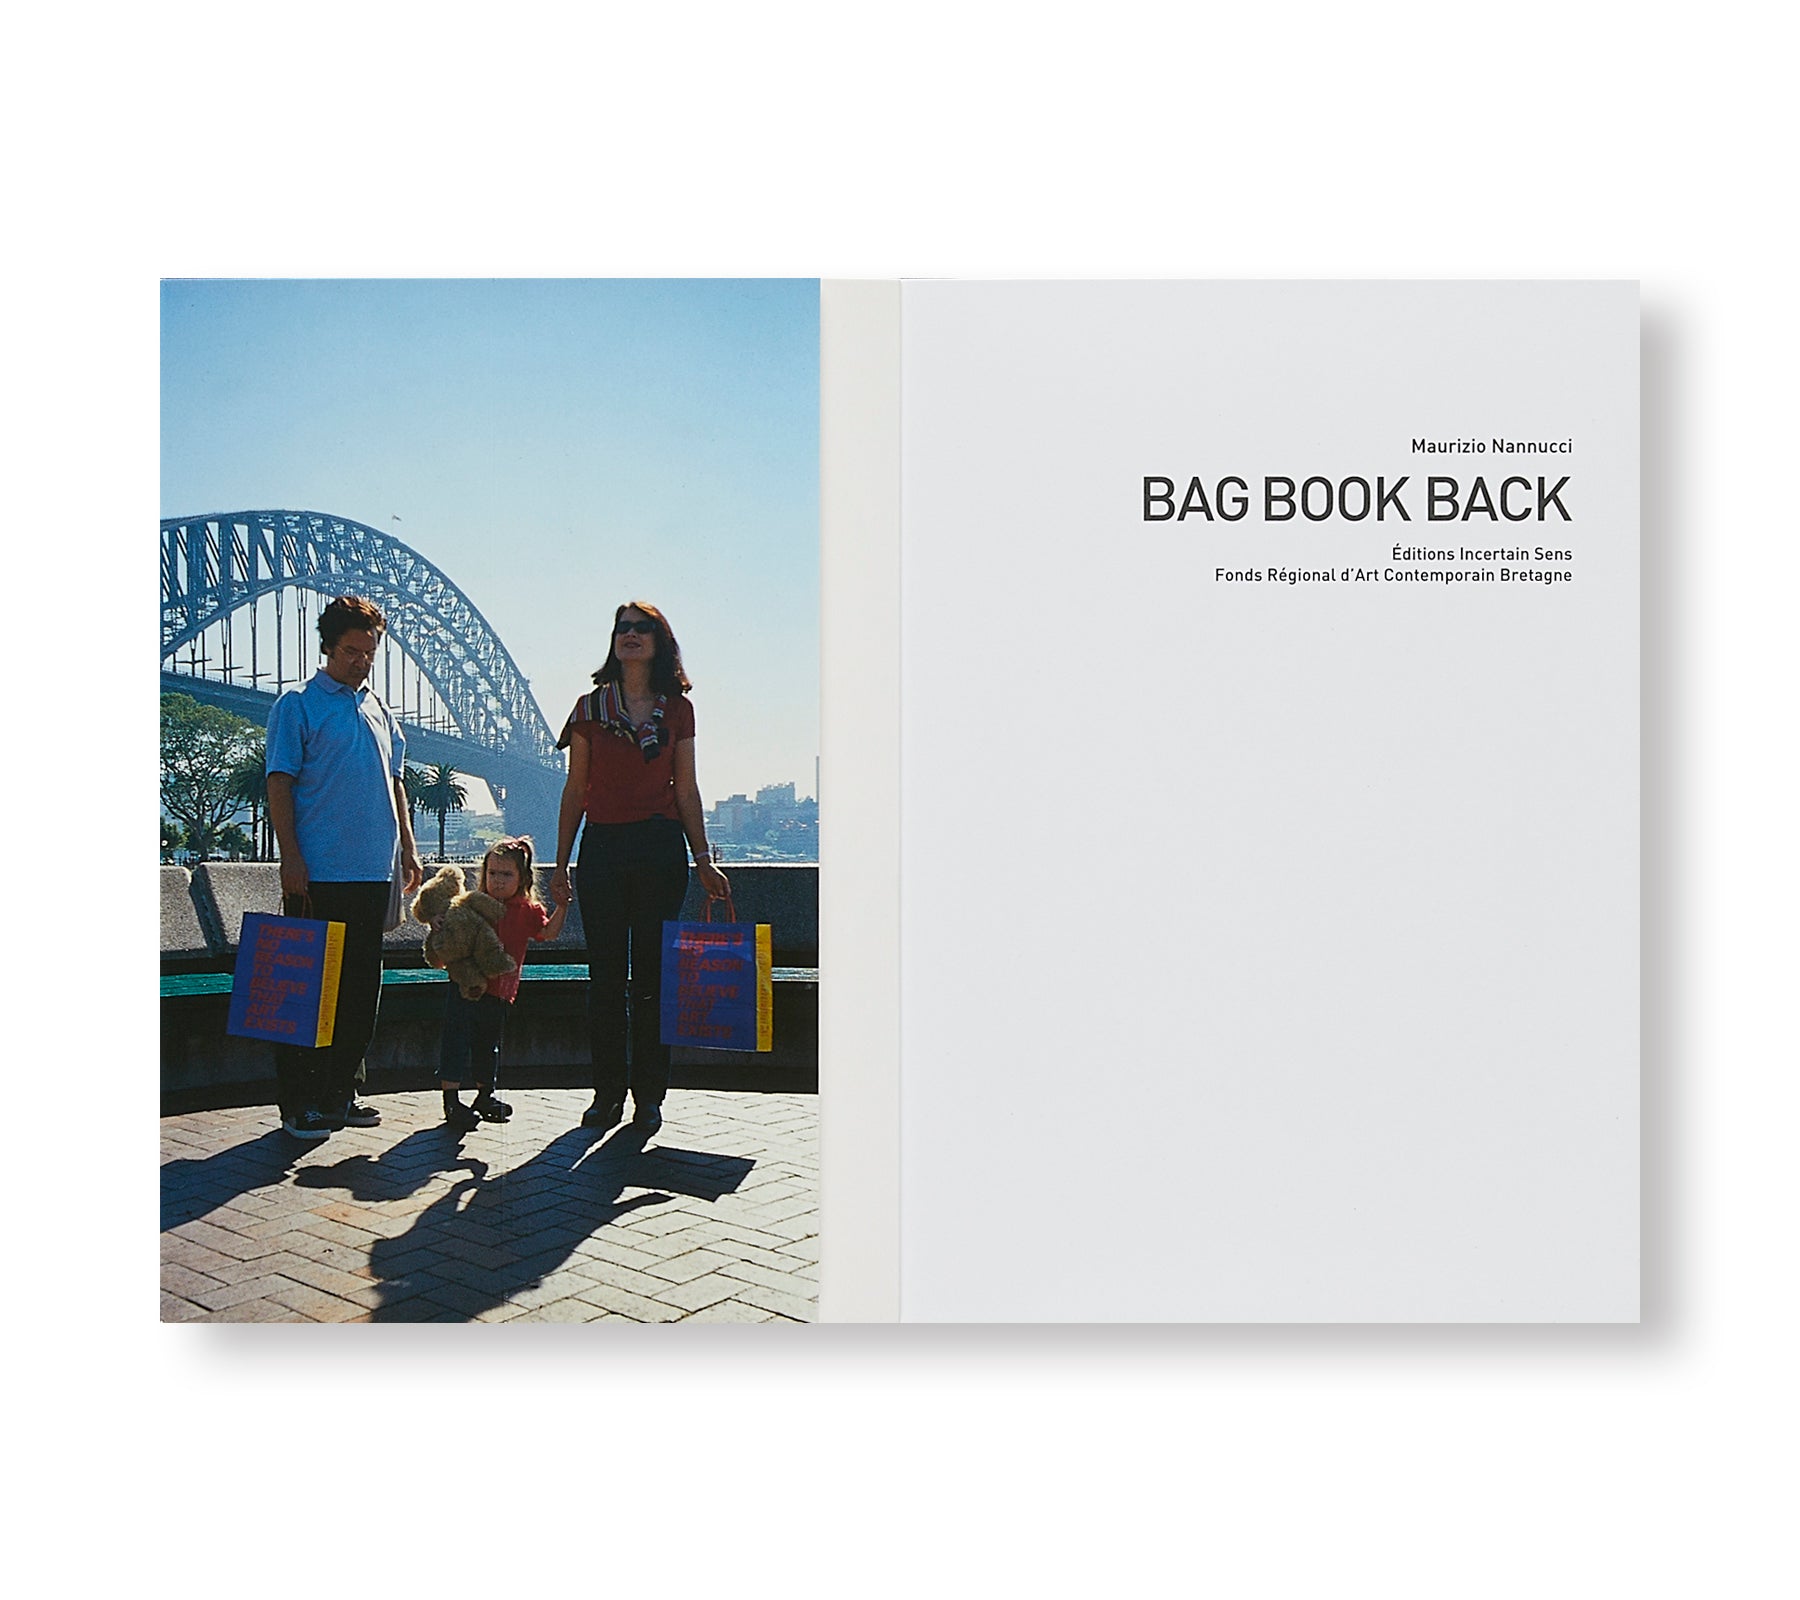 BAG BOOK BACK by Maurizio Nannucci